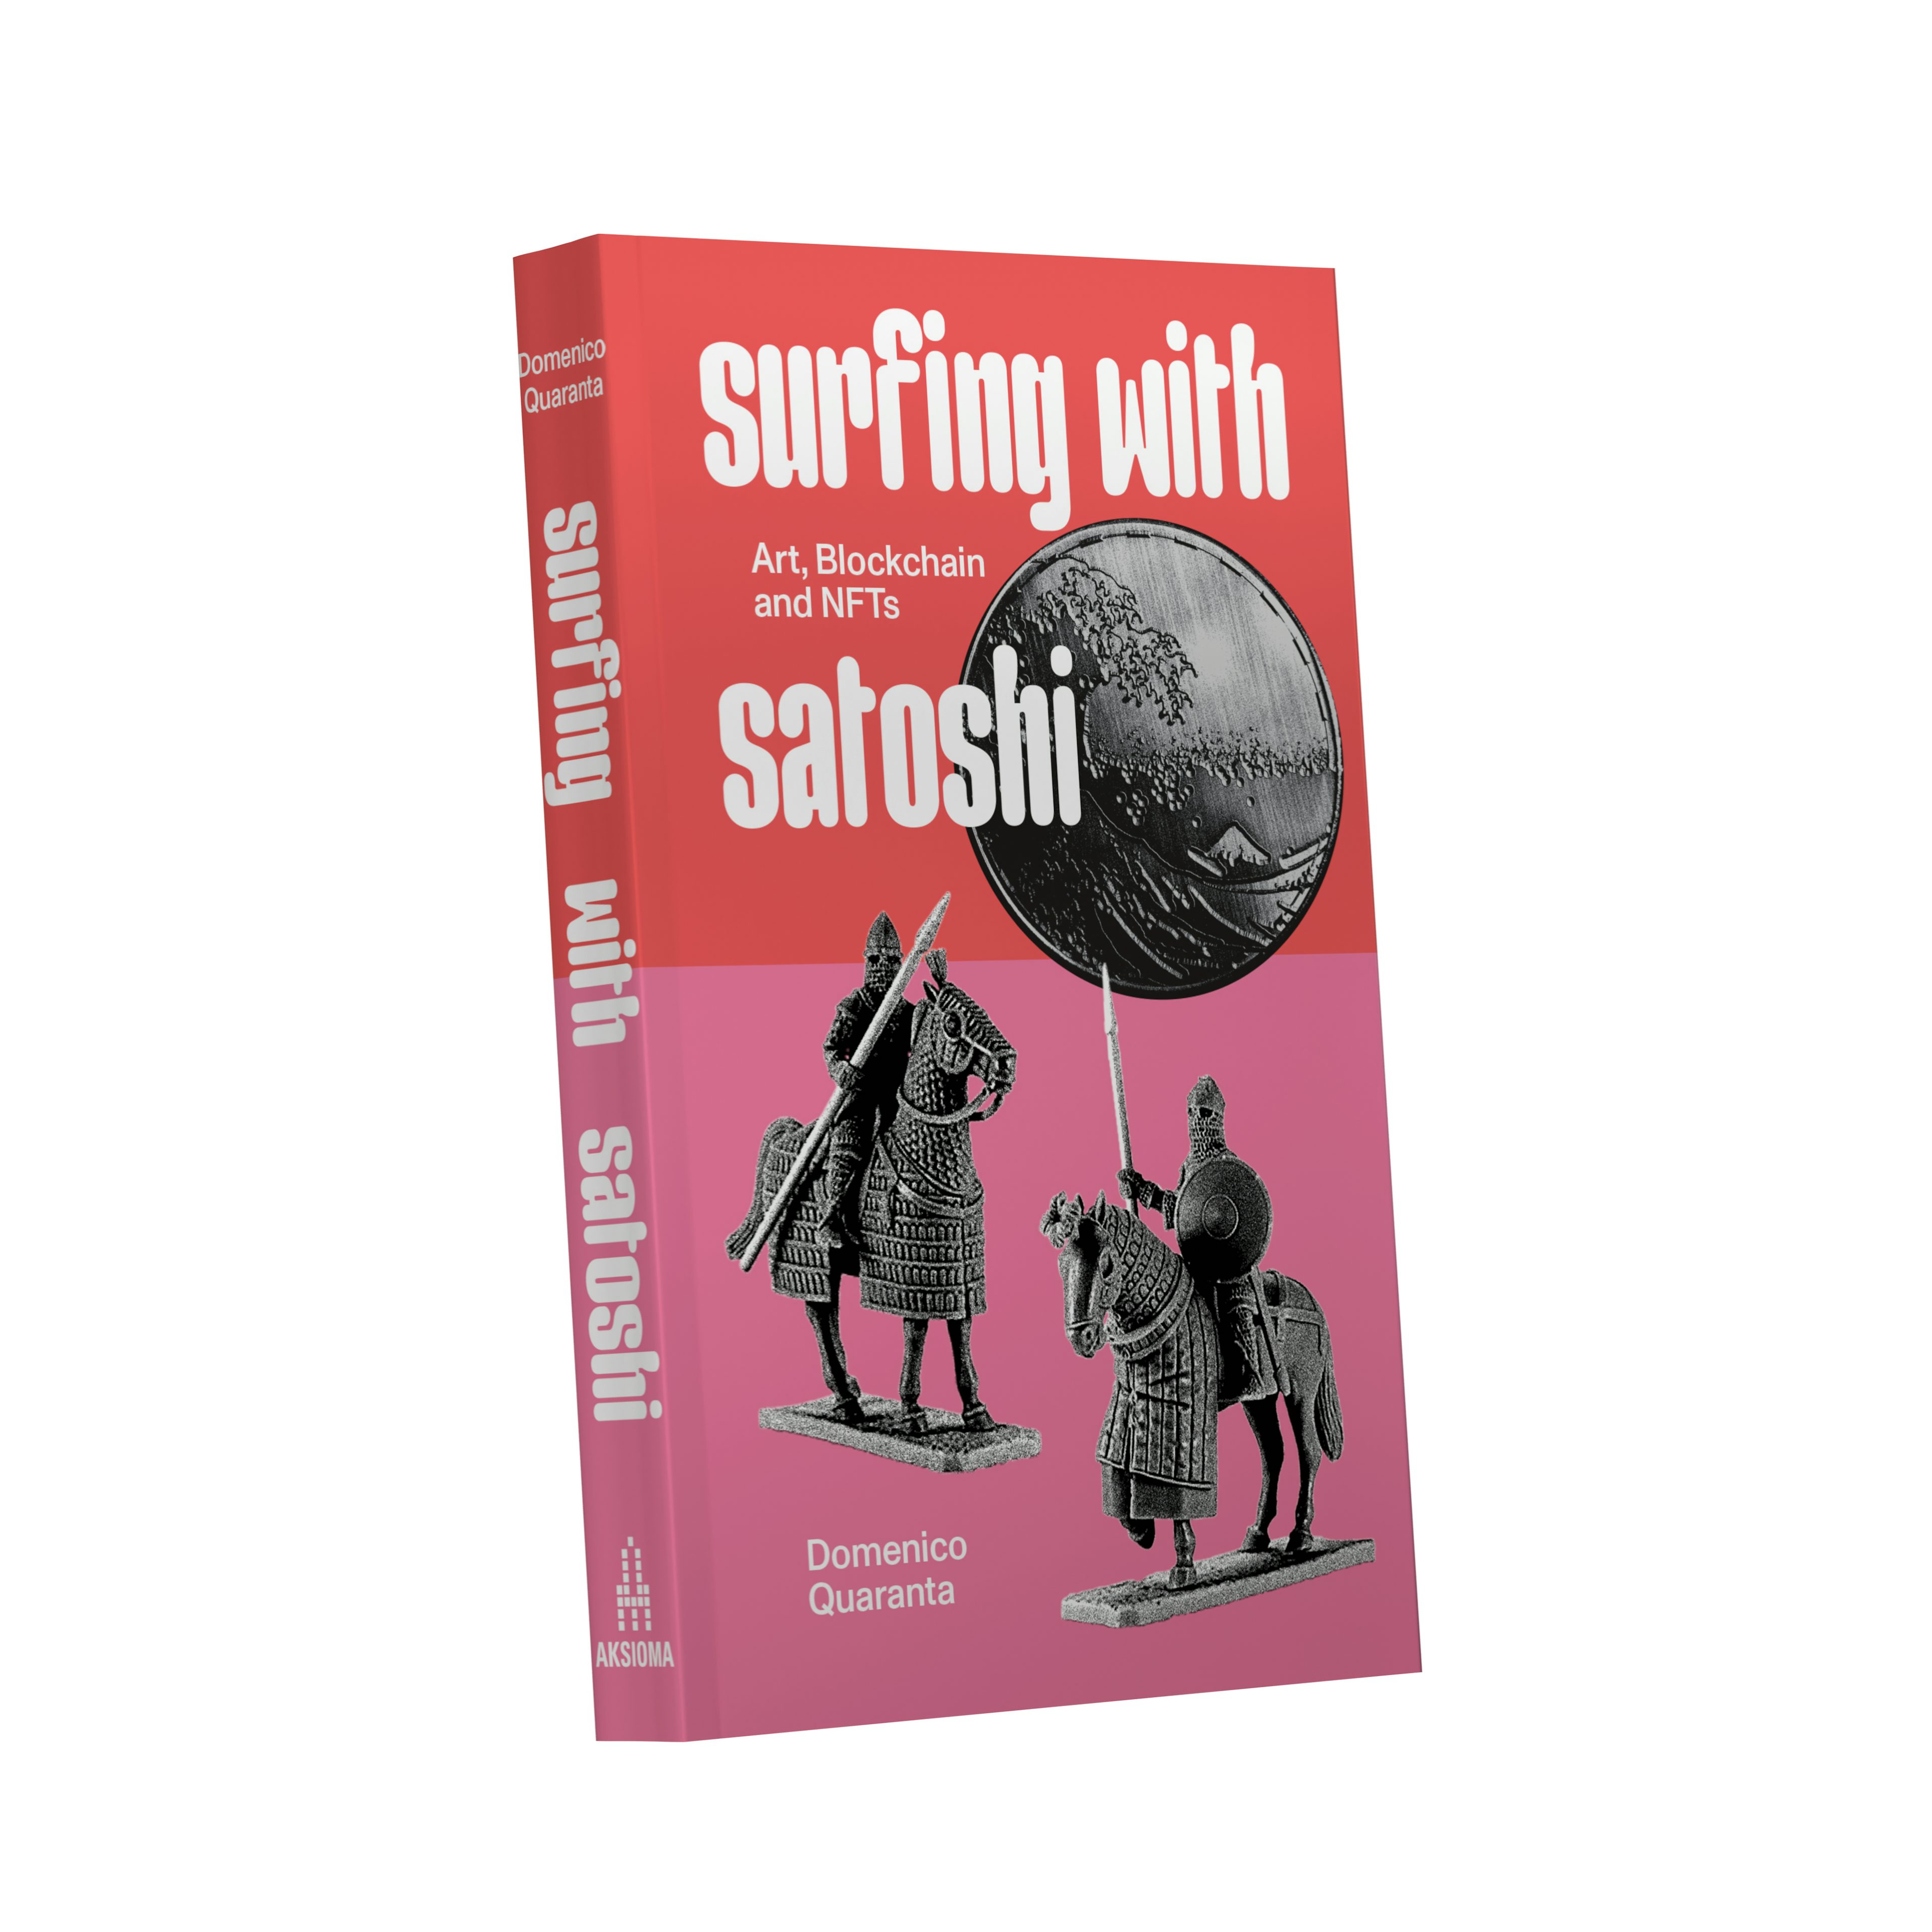 Domenico Quaranta, Surfing with Satoshi. Art, Blockchain and NFTs, Aksioma – Institute for Contemporary Art, Ljubljana 2022. 10.5 x 16.7 cm, 376 pages, ISBN: 978-961-7173-12-3 